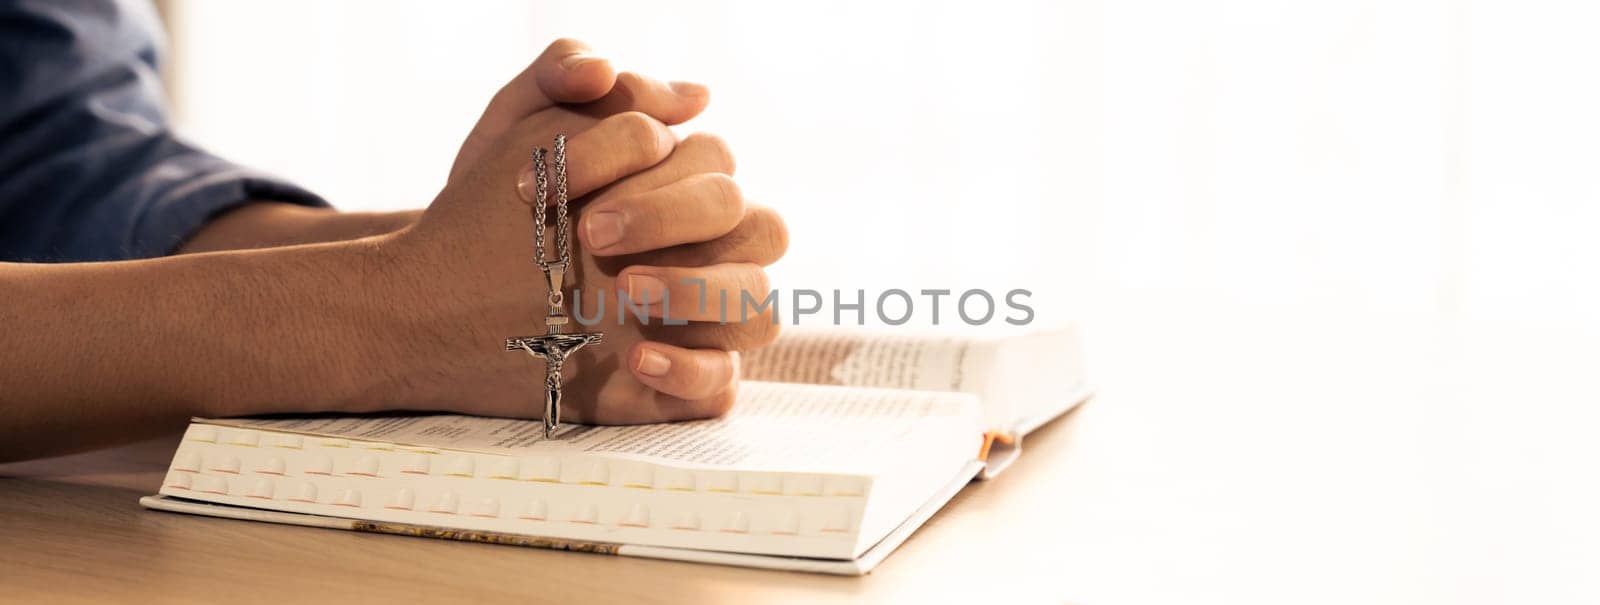 Male folded hand prayed on holy bible book. Blurring background Burgeoning. by biancoblue